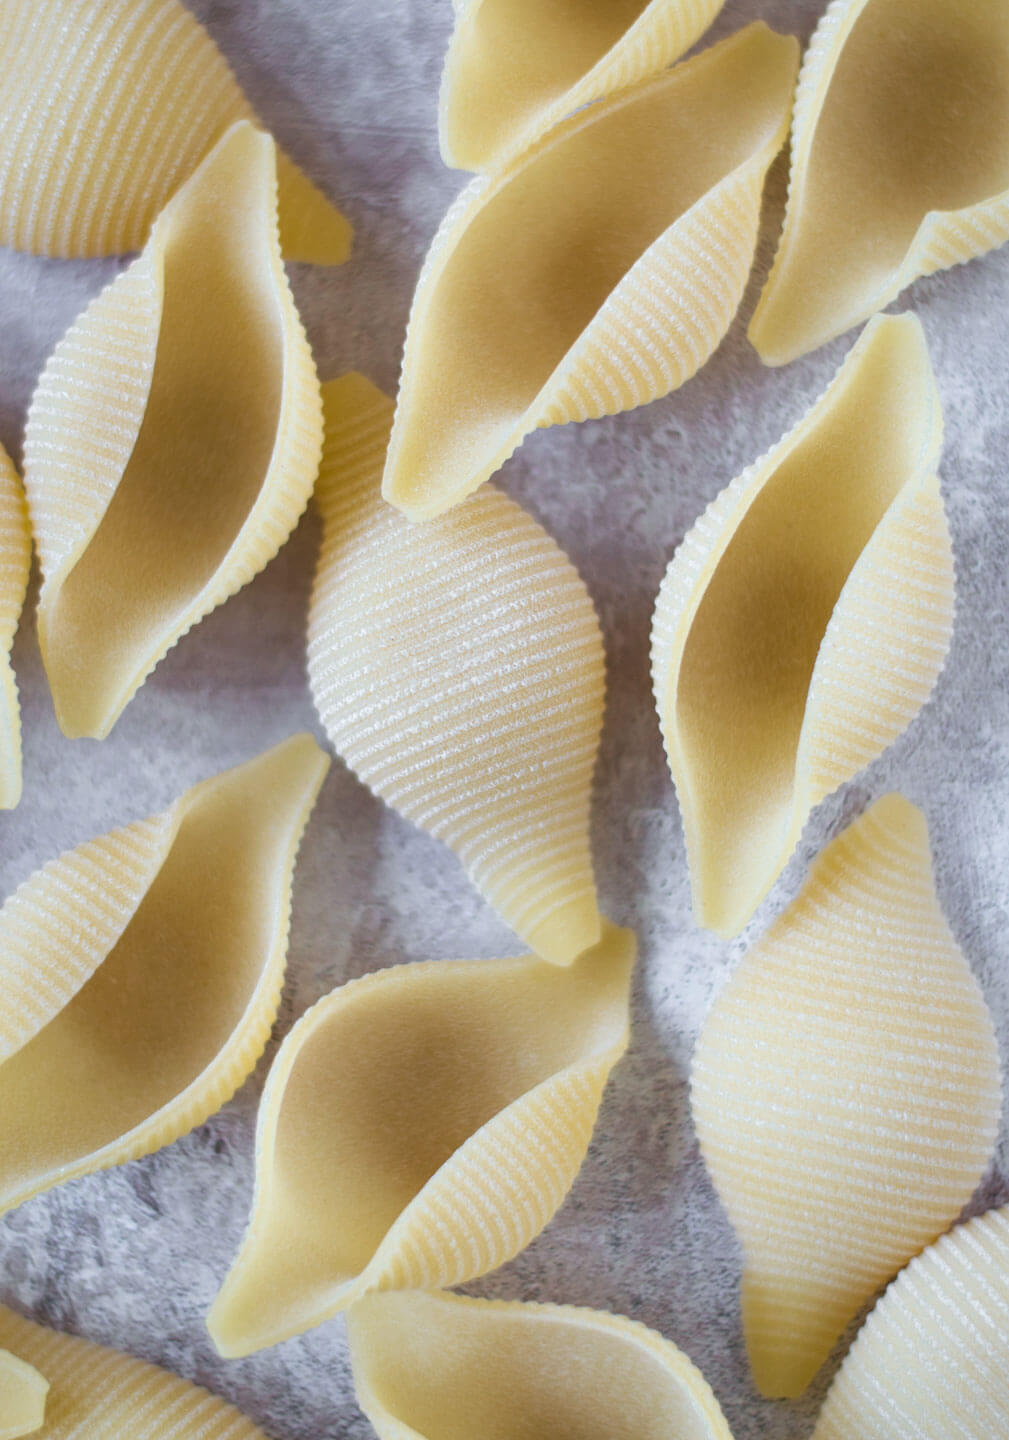 Giant pasta shells 